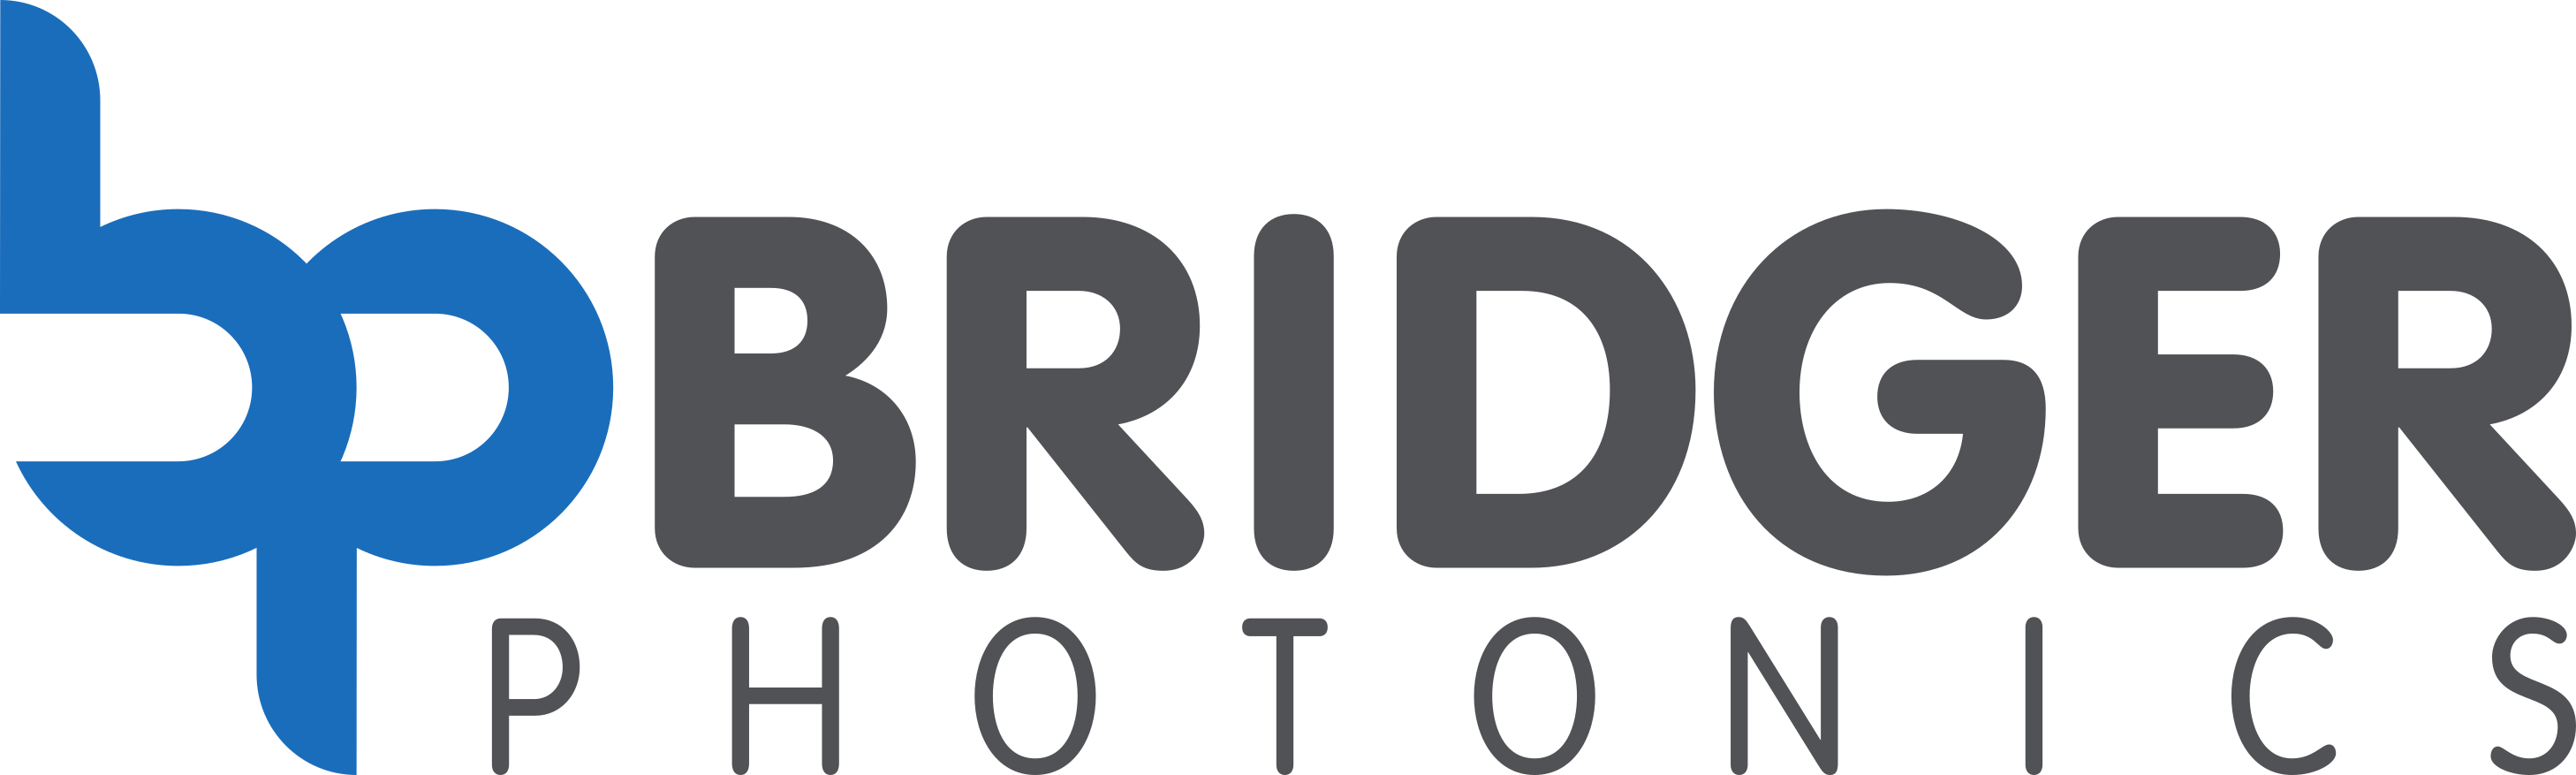 Bridger_Logo